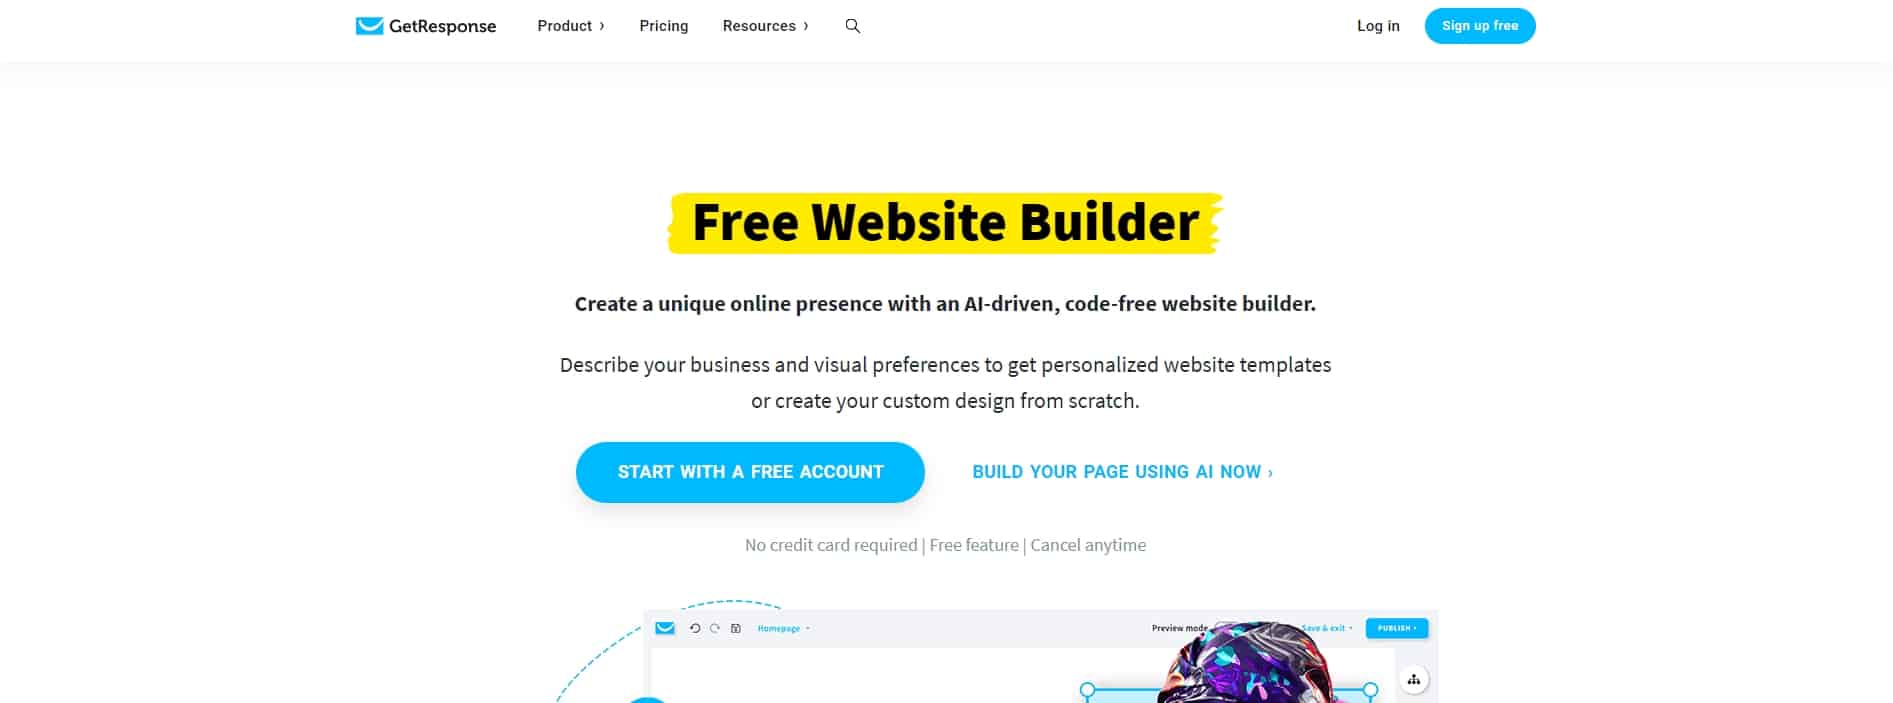 GetResponse ai website builder homepage